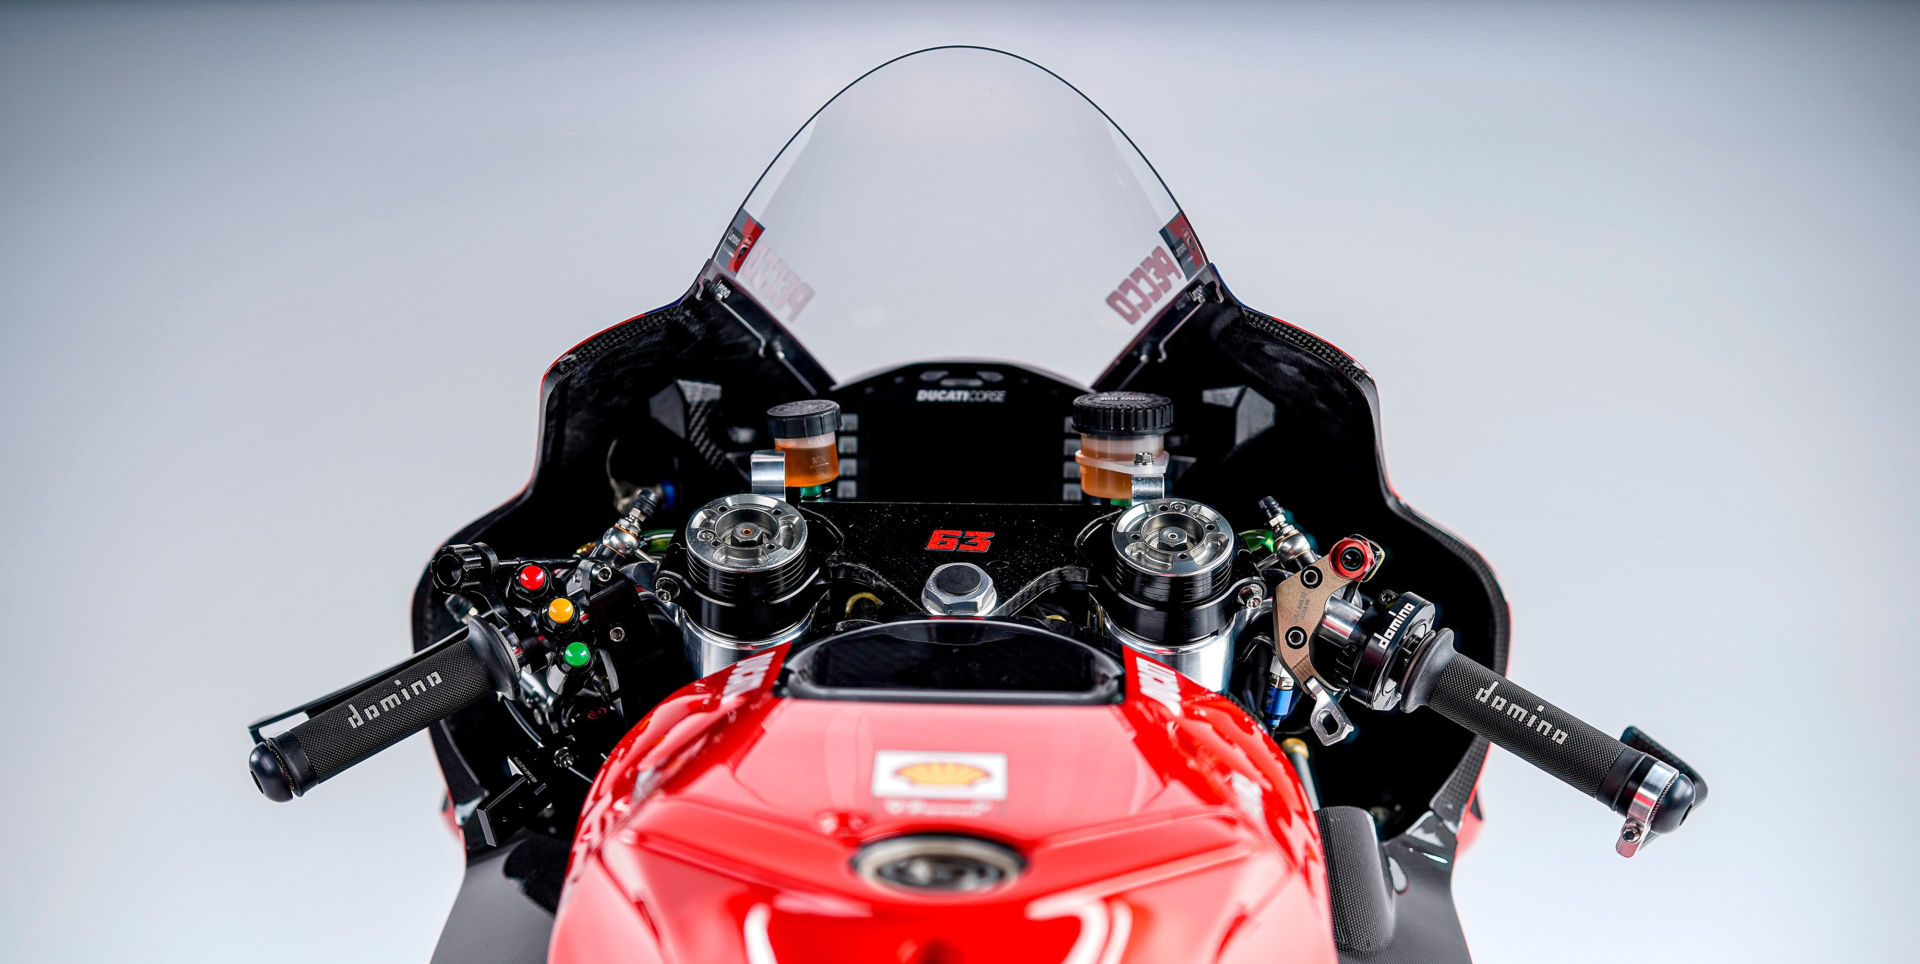 The cockpit and blank dashboard display of Francesco Bagnaia's Lenovo Ducati Desmosedici MotoGP racebike. Photo courtesy Ducati.